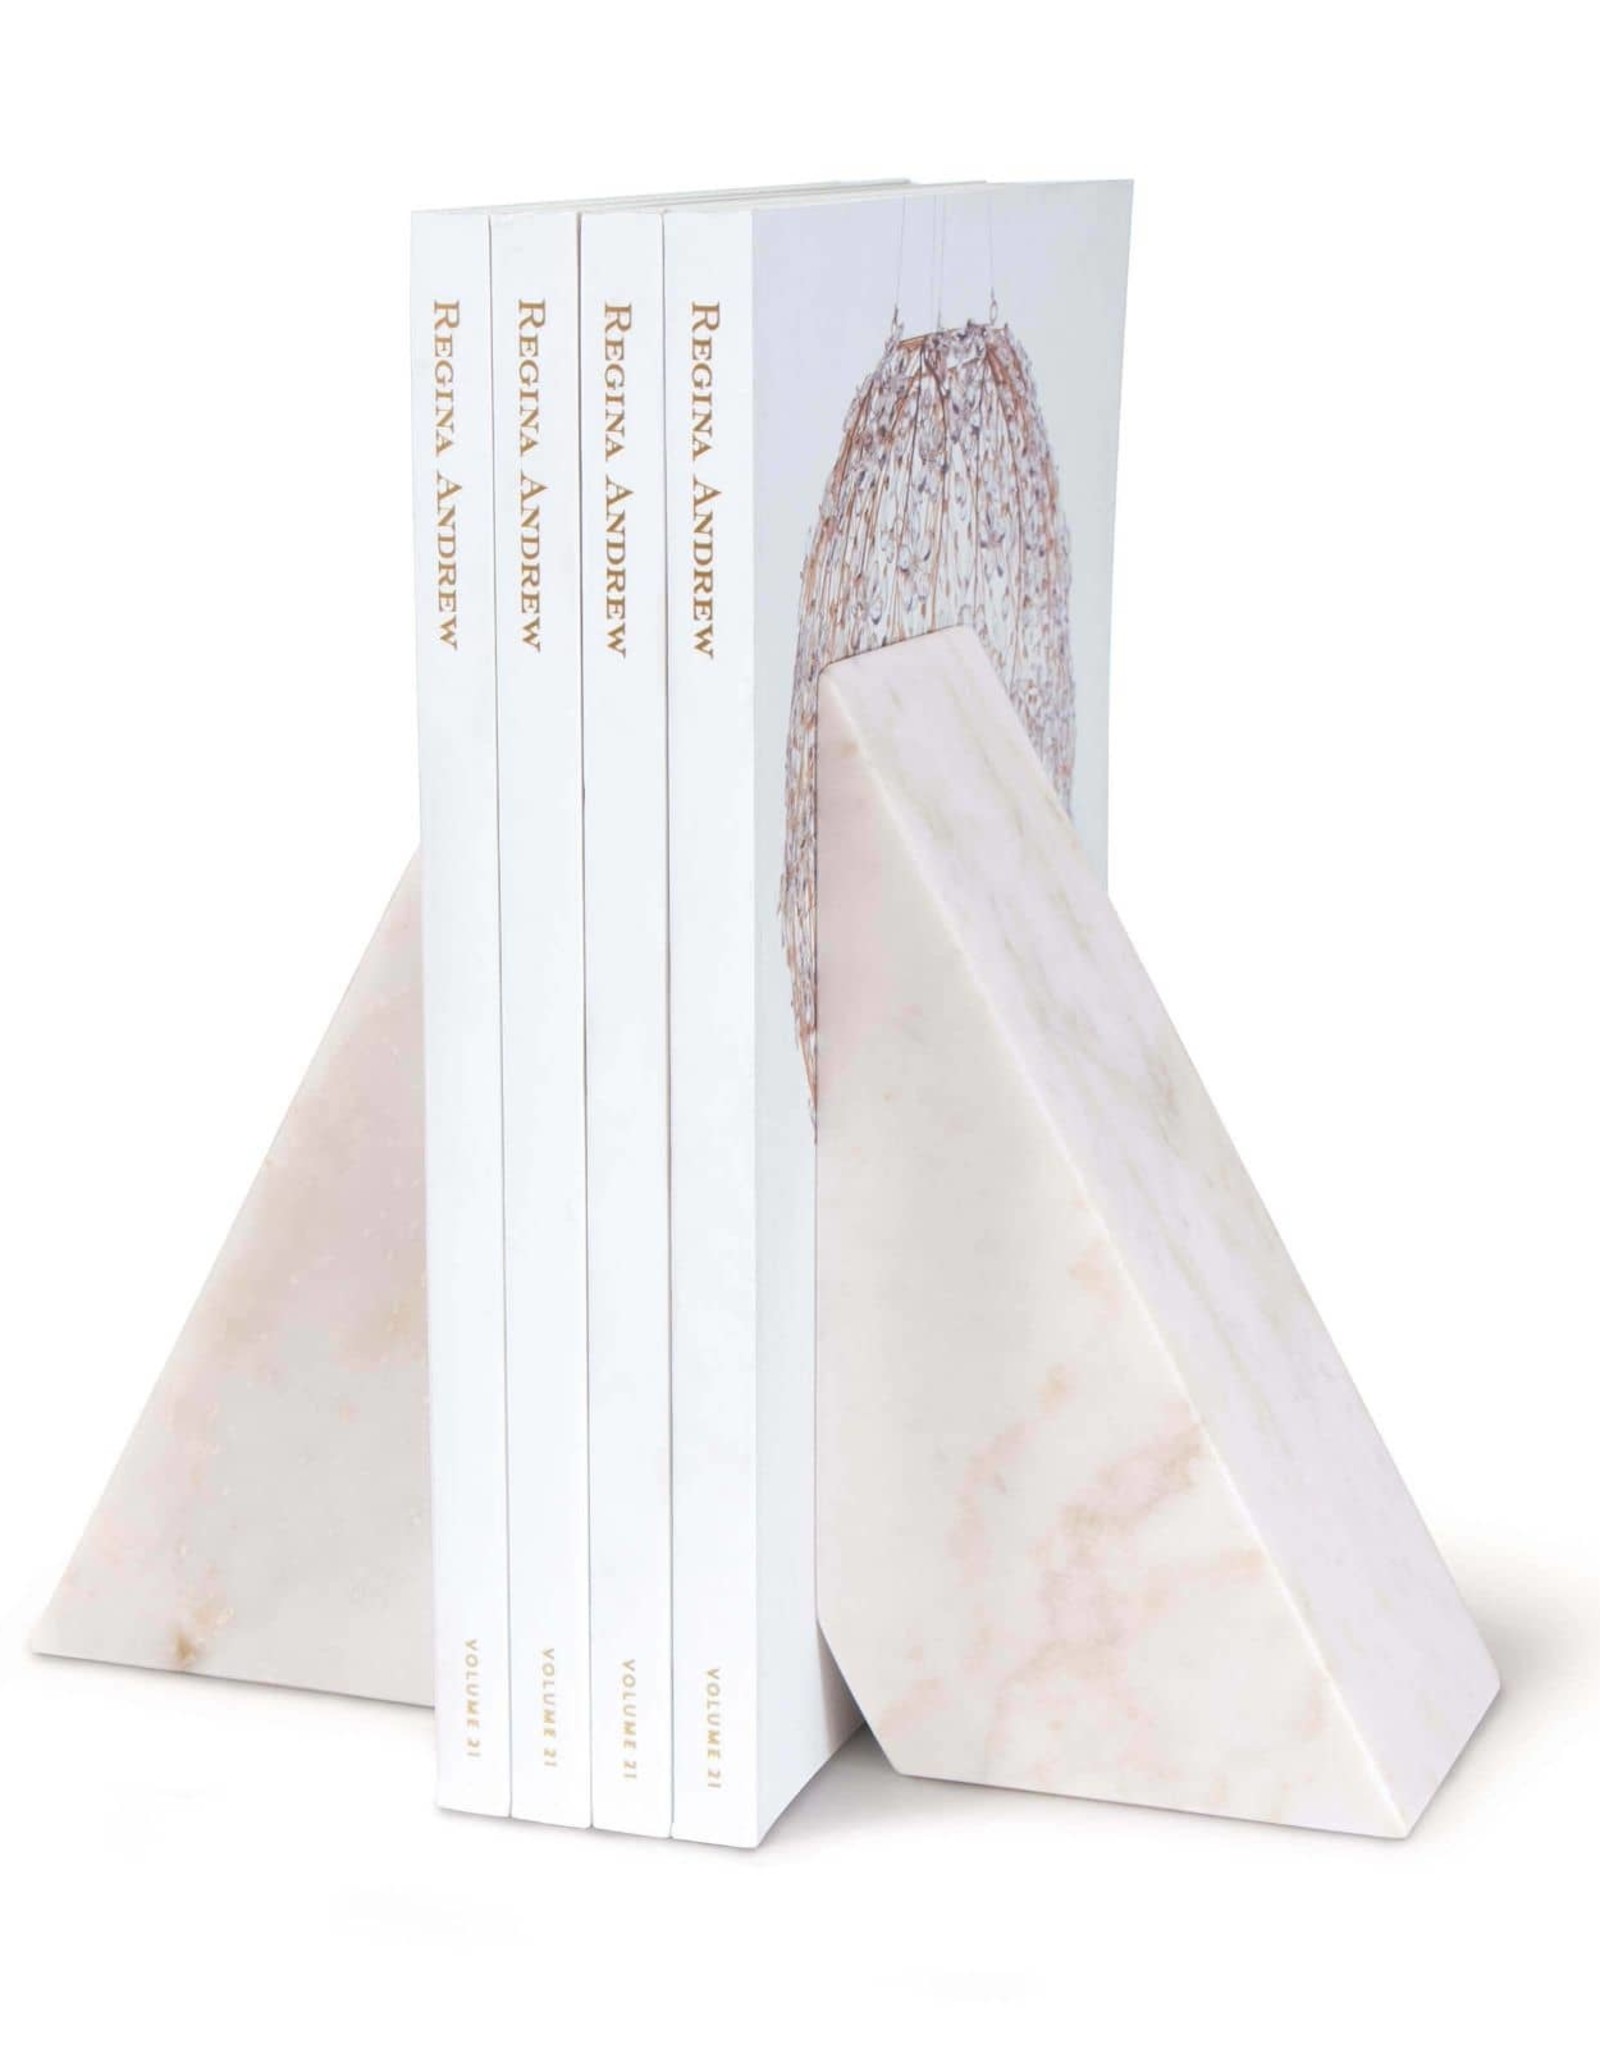 Regina Andrew Design Othello Marble Bookends (White)